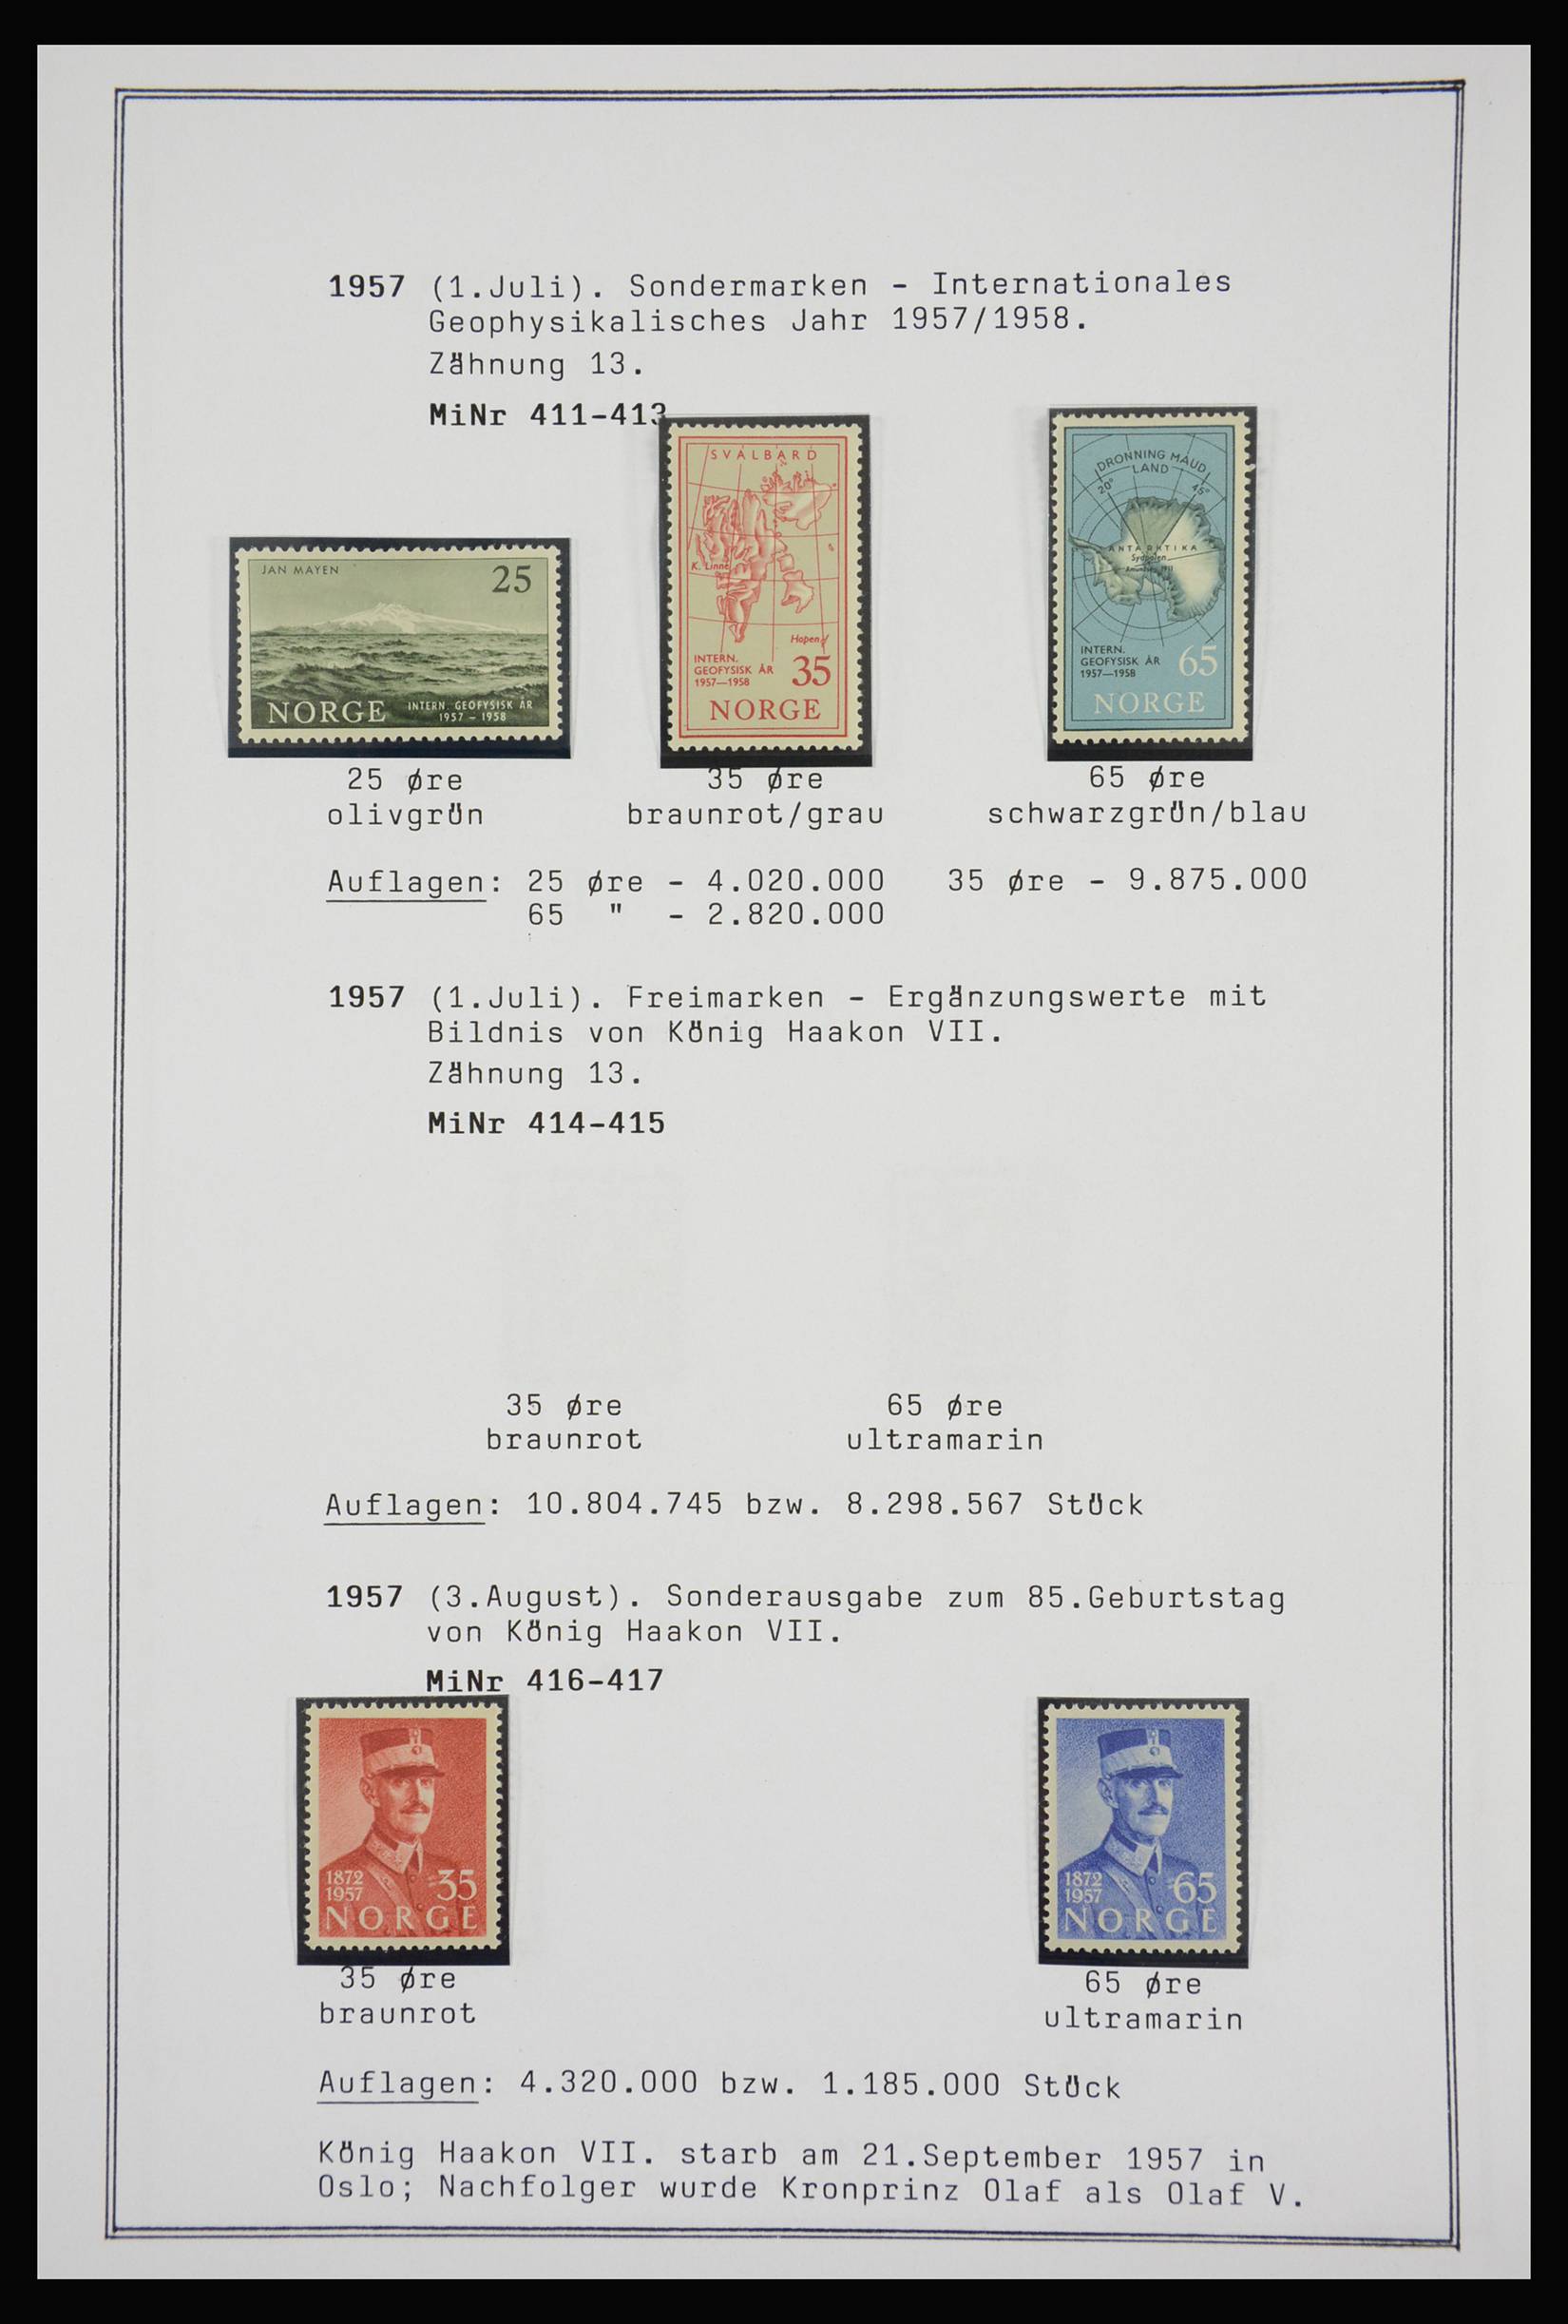 27925 221 - 27925 Scandinavia 1855-1957.